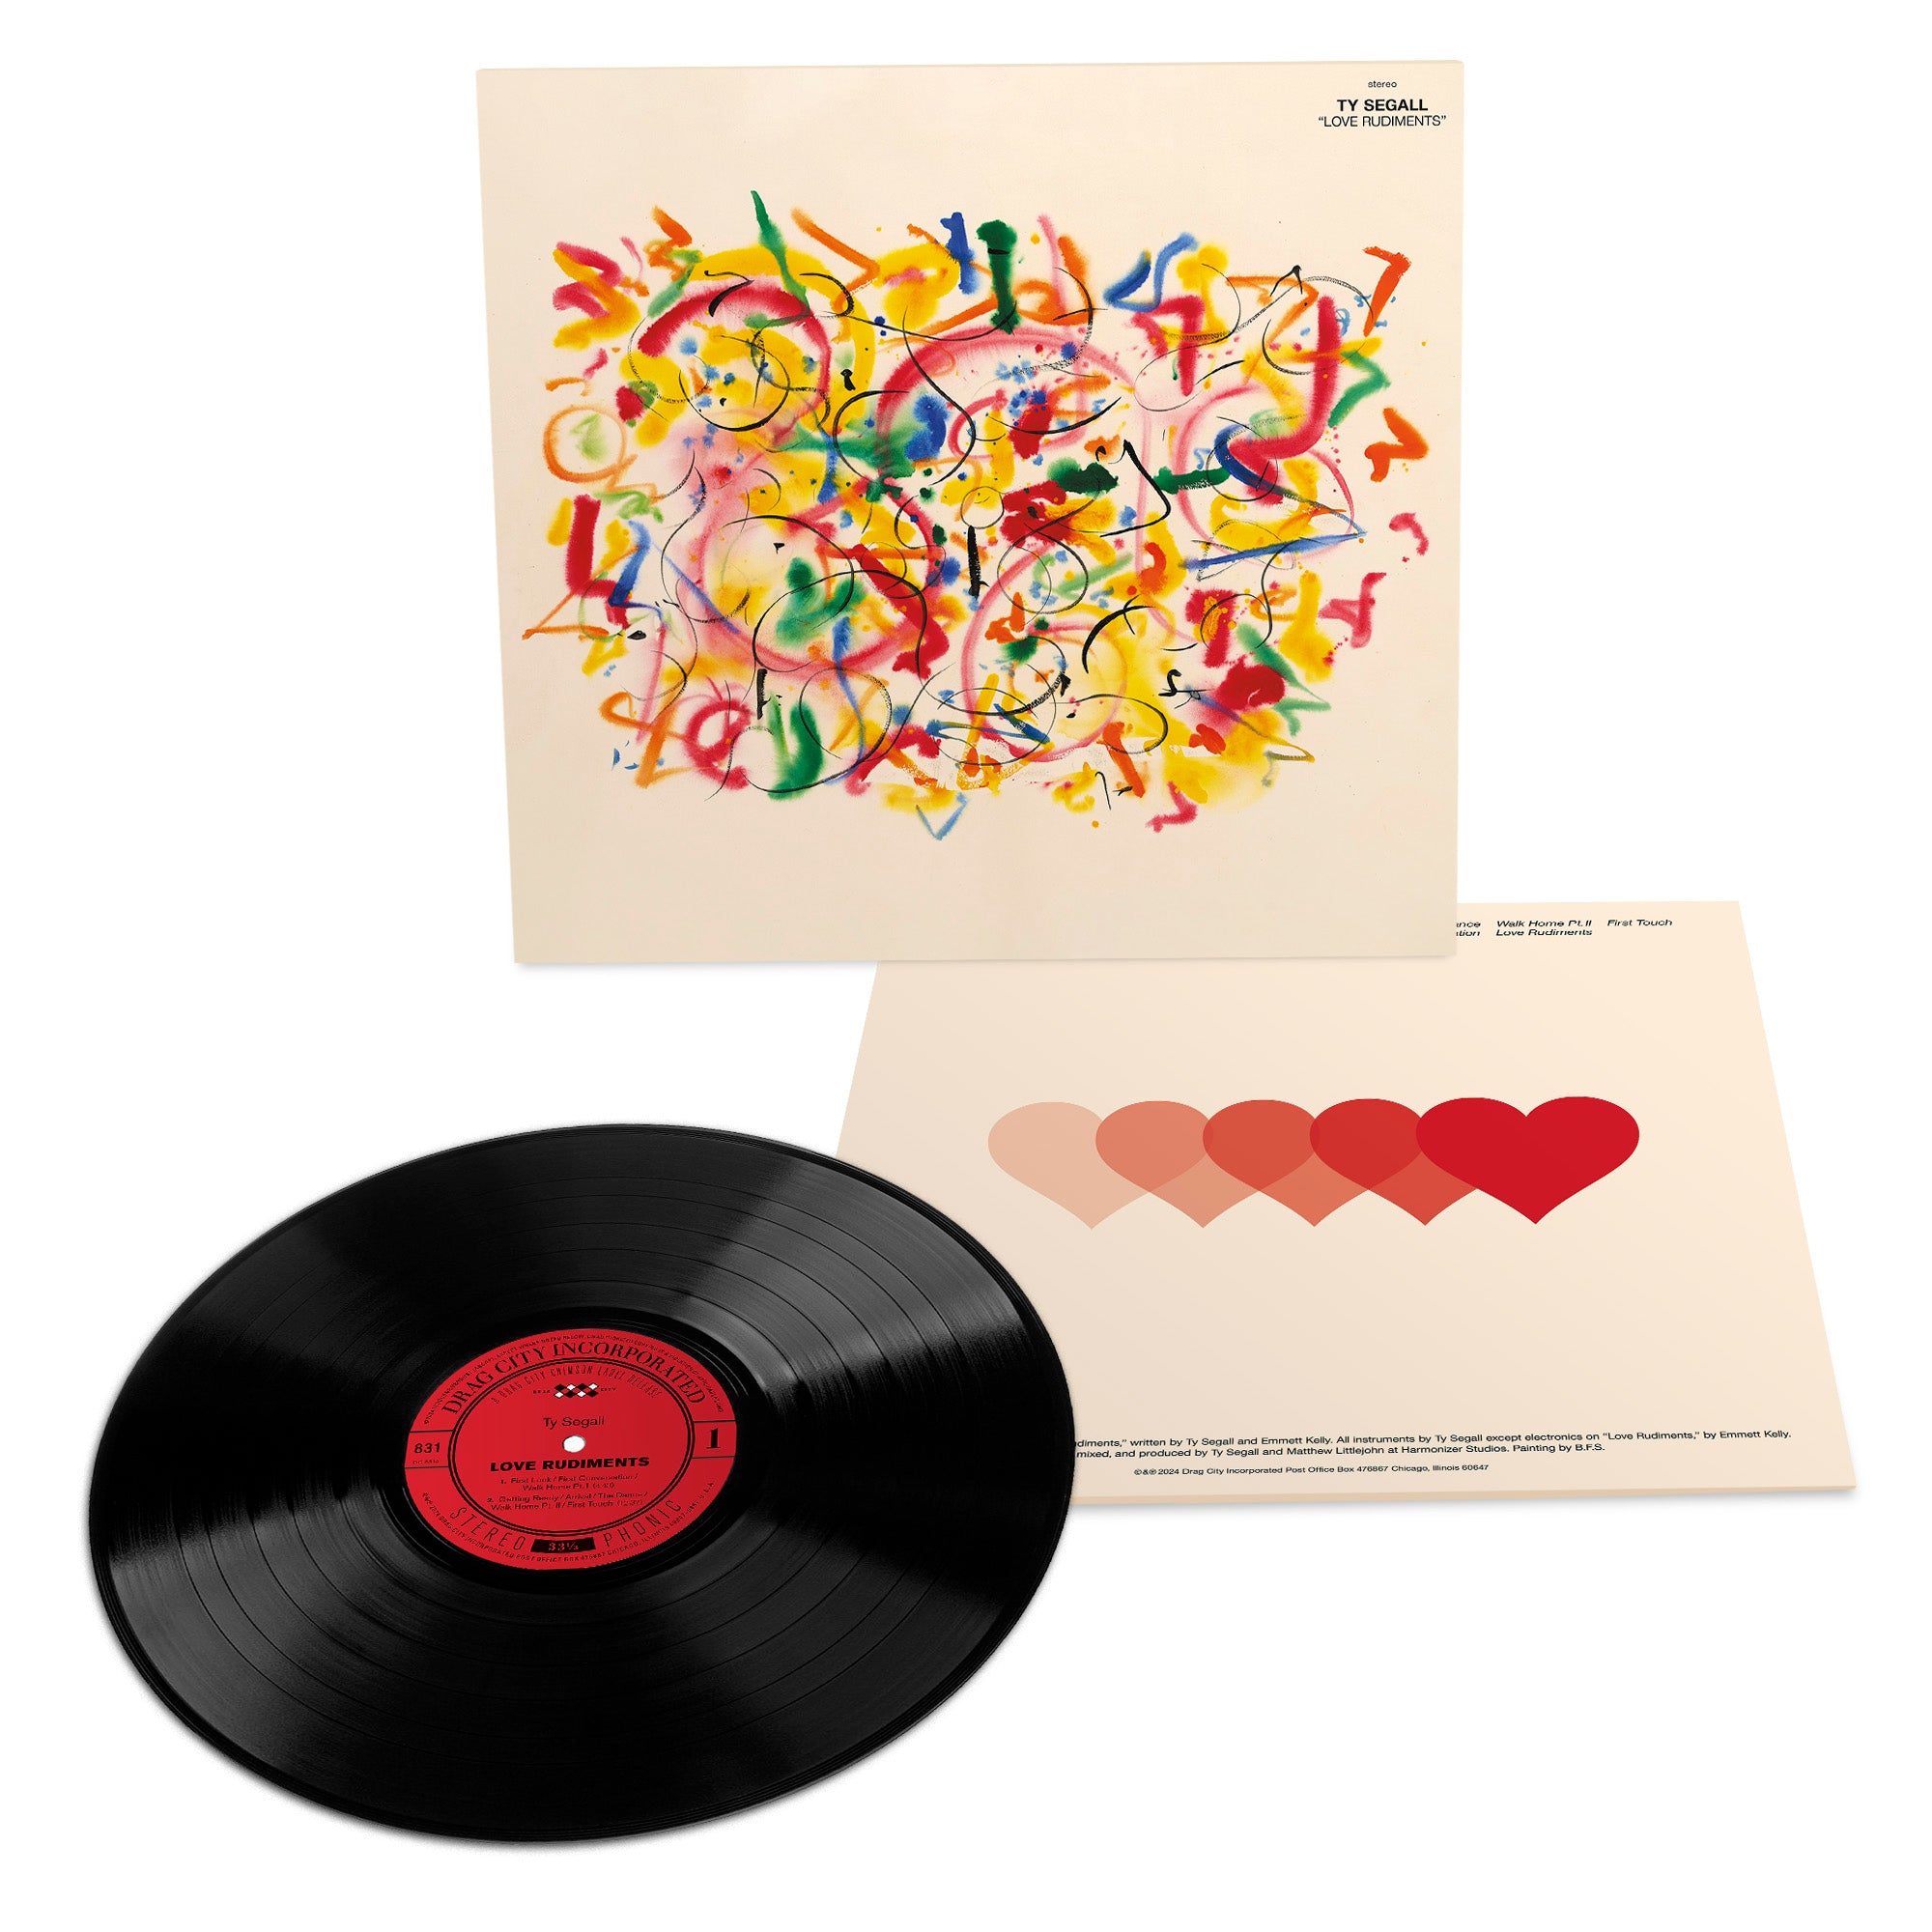 Ty Segall - Love Rudiments: Vinyl LP